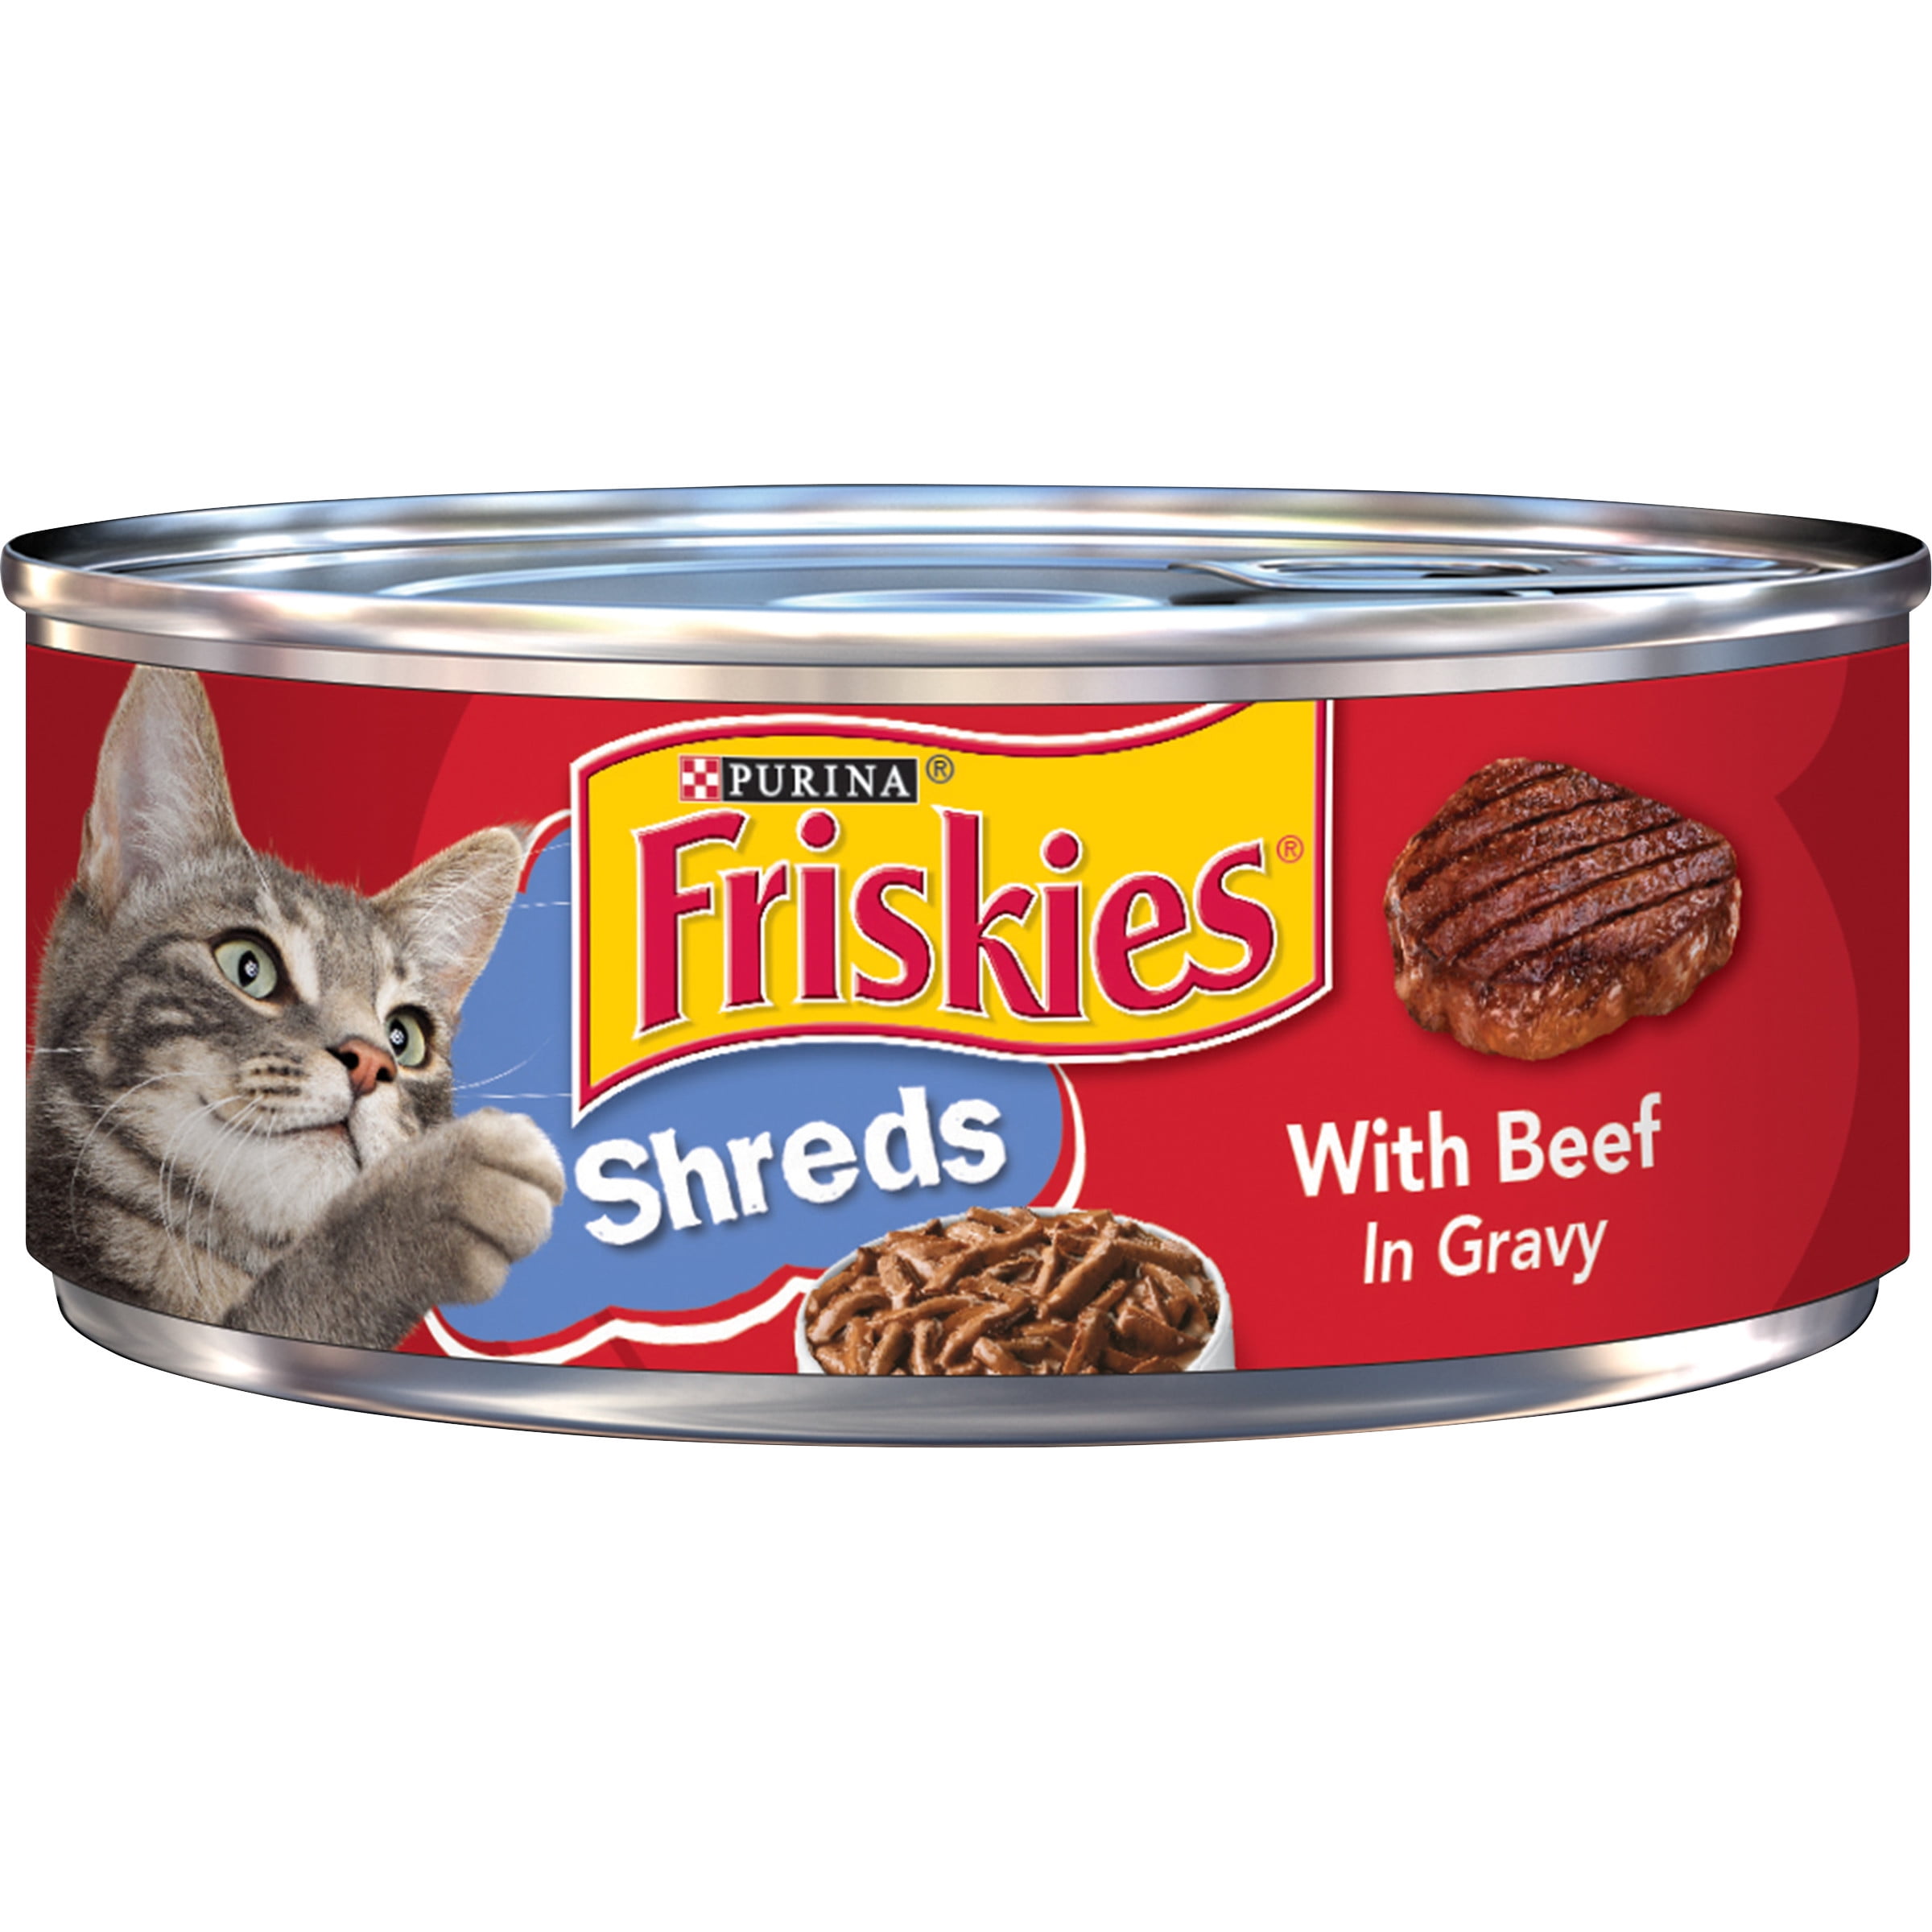 Friskies Shreds Beef in Gravy Wet Cat Food, 5.5 oz Can